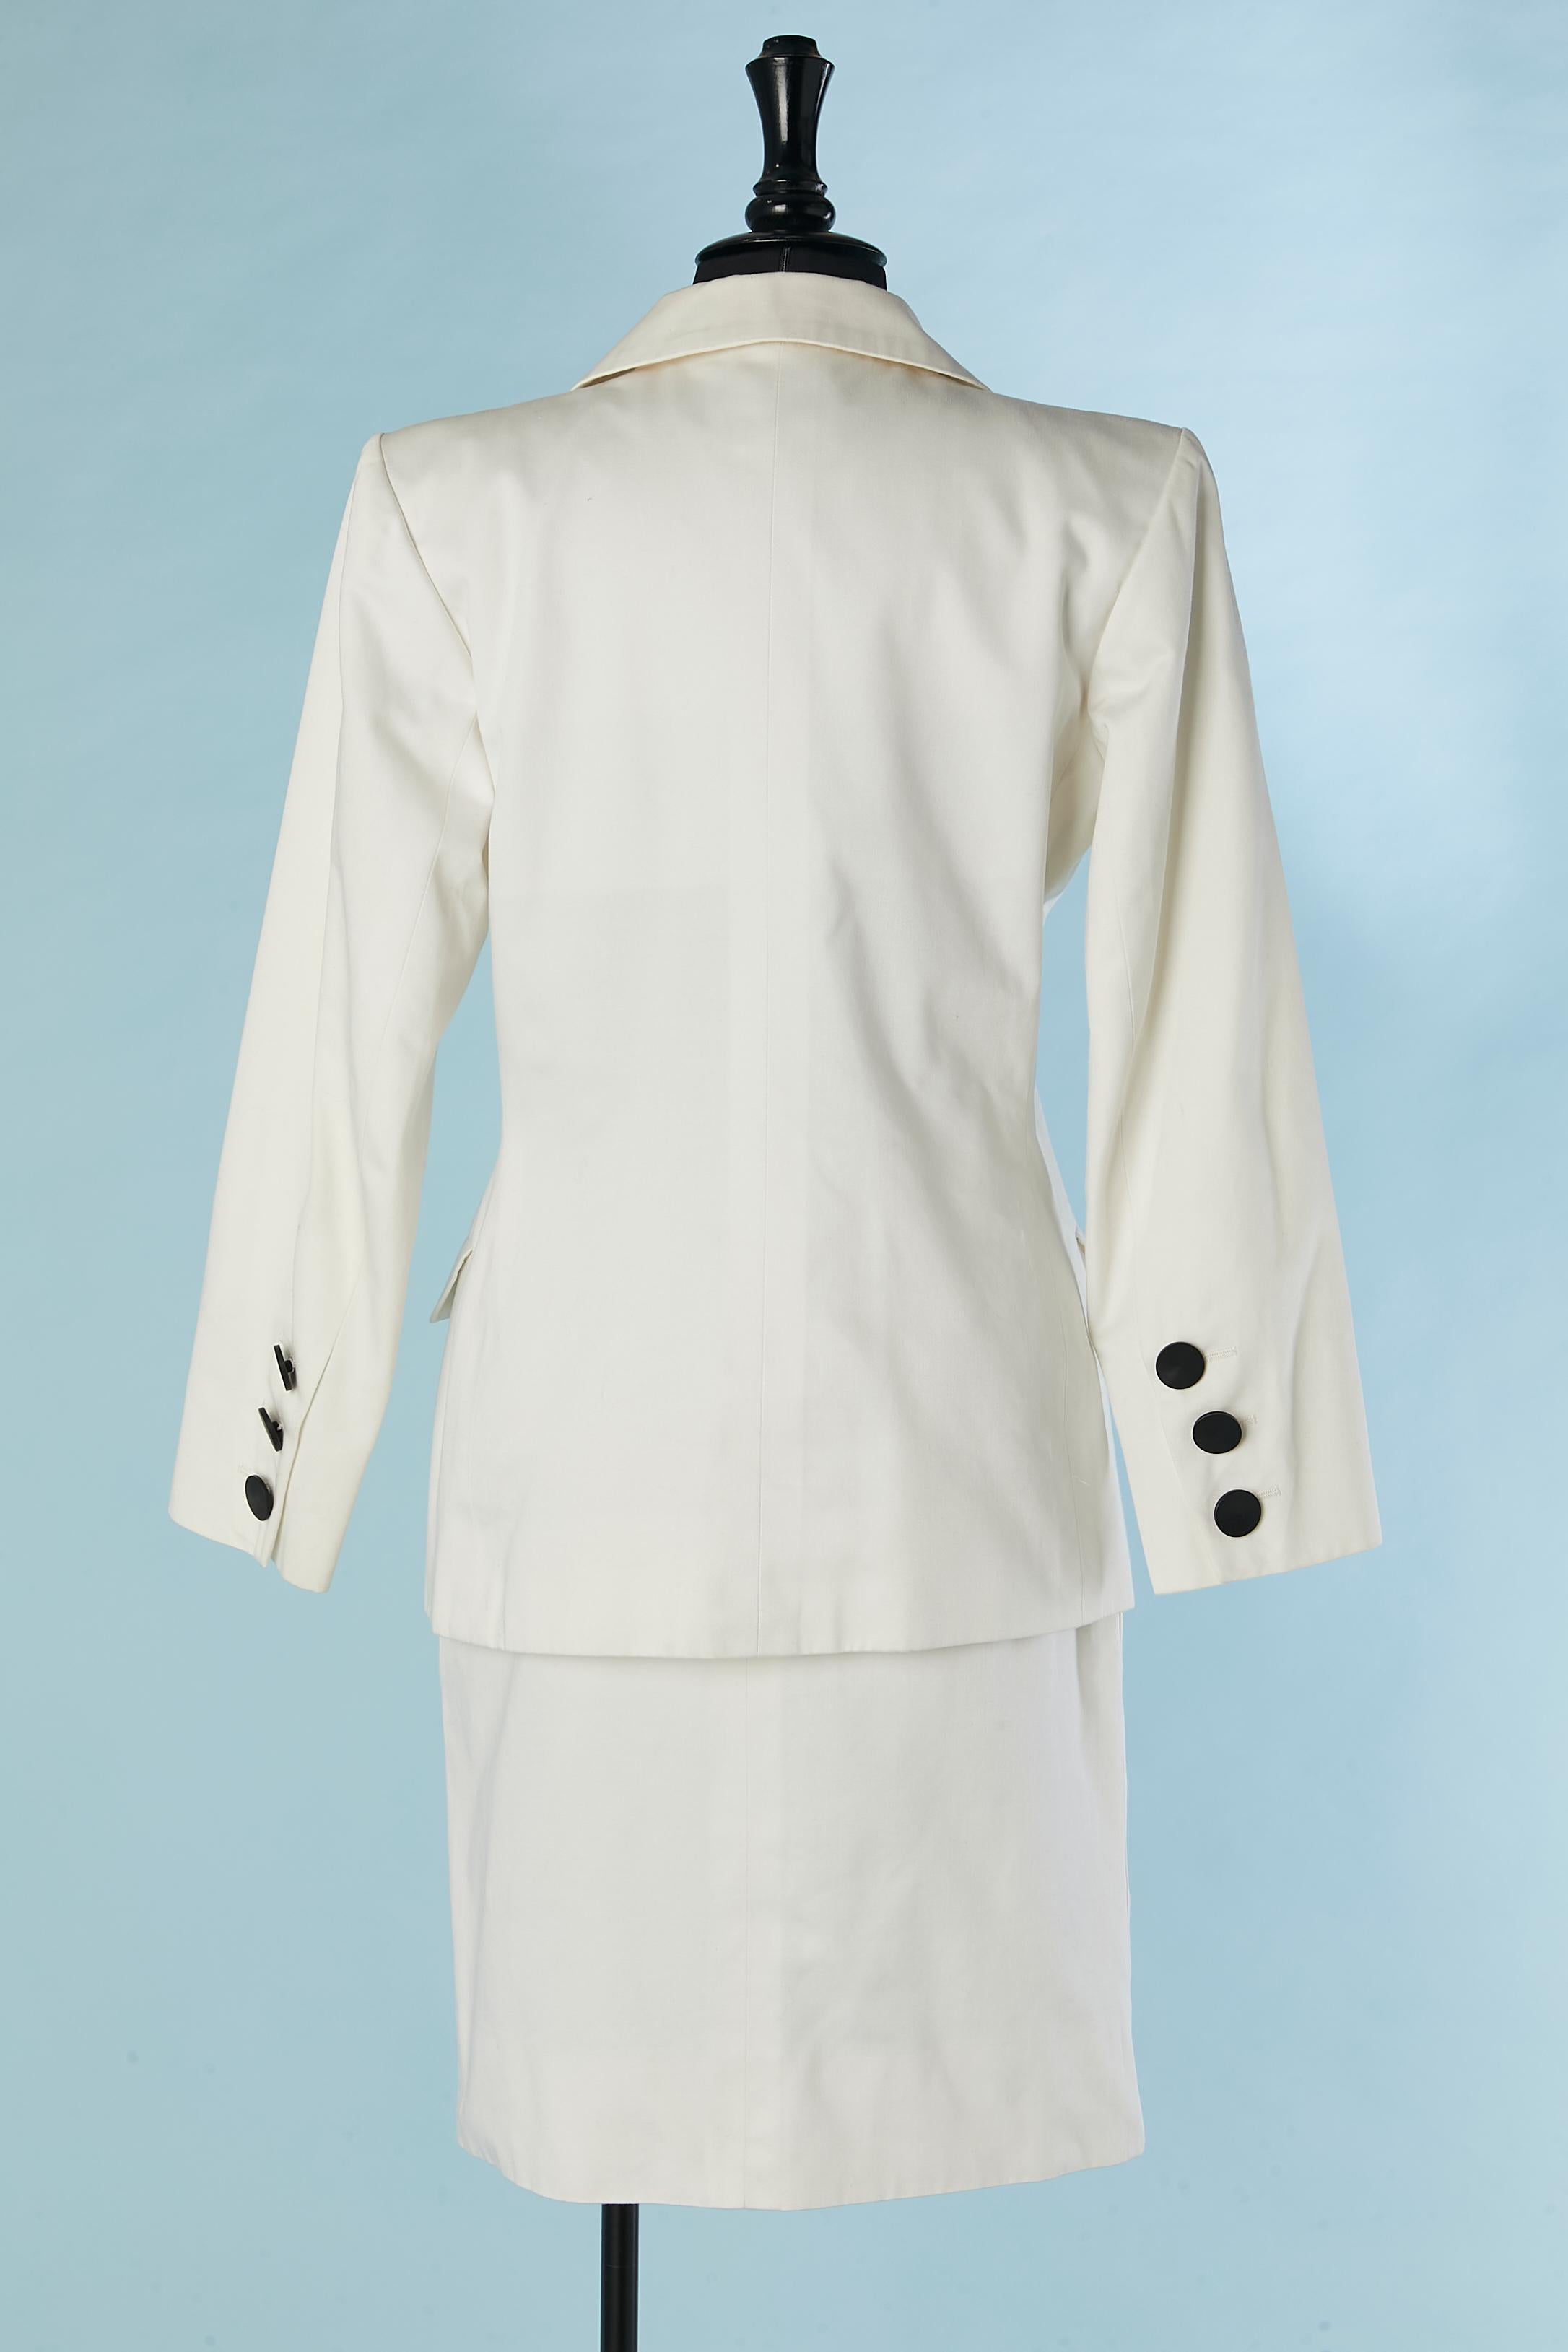 White cotton skirt suit with black buttons Yves Saint Laurent Rive Gauche  For Sale 2